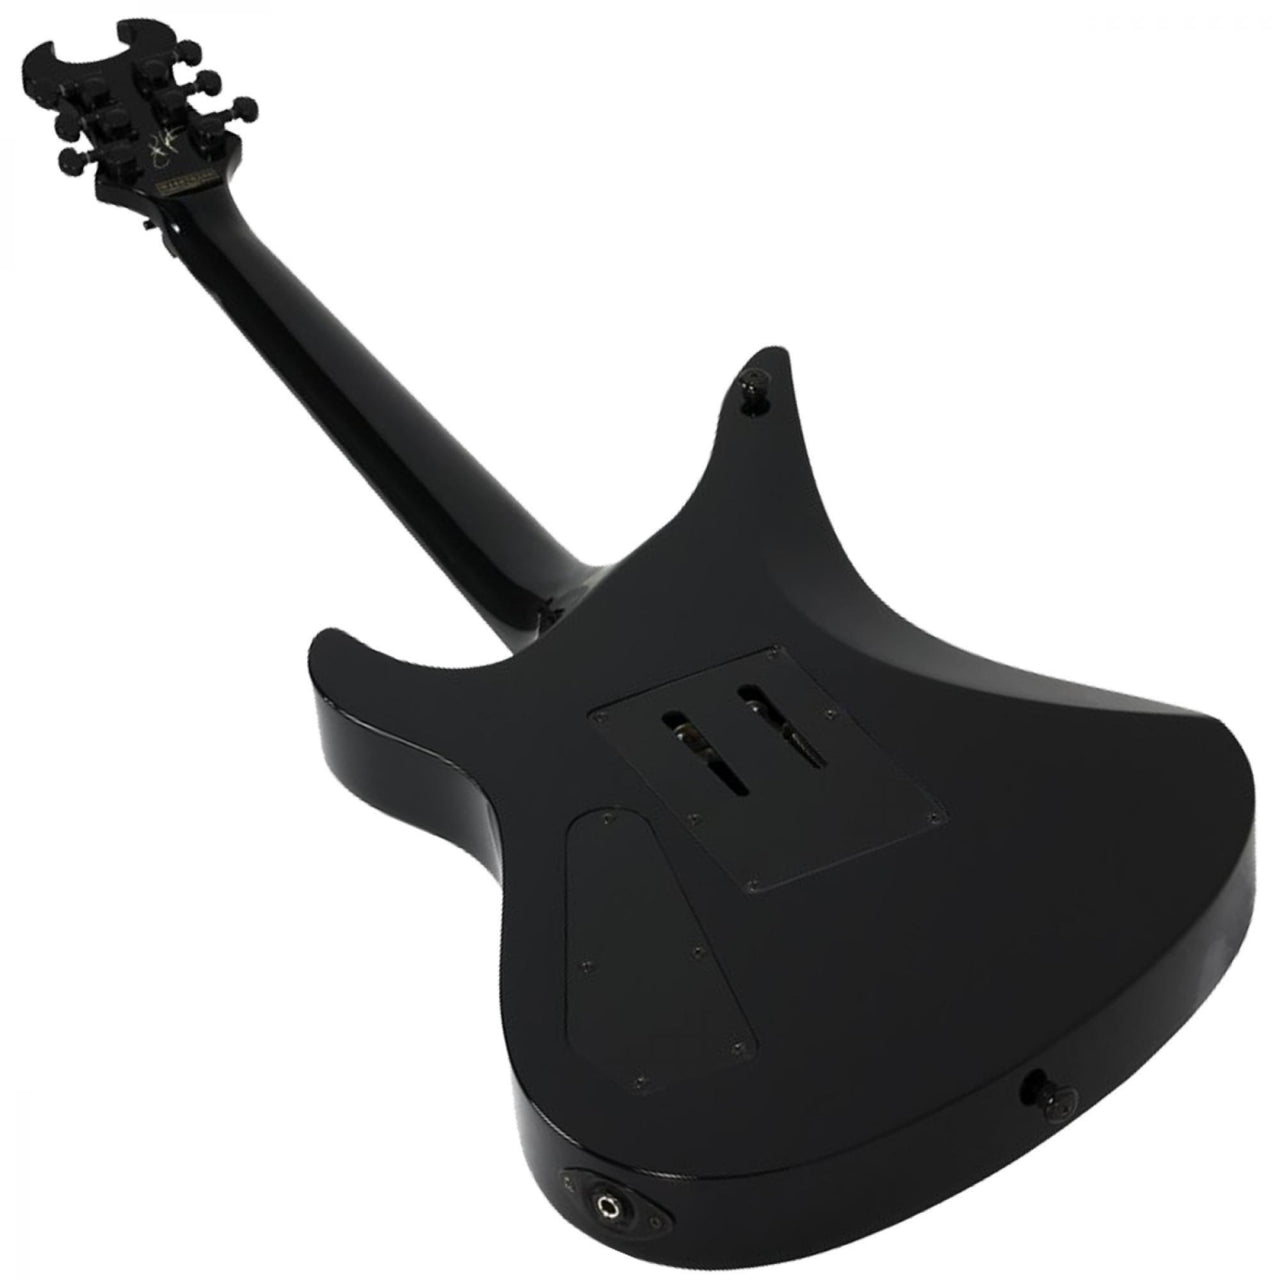 Guitarra Electrica Schecter Synyster Custom